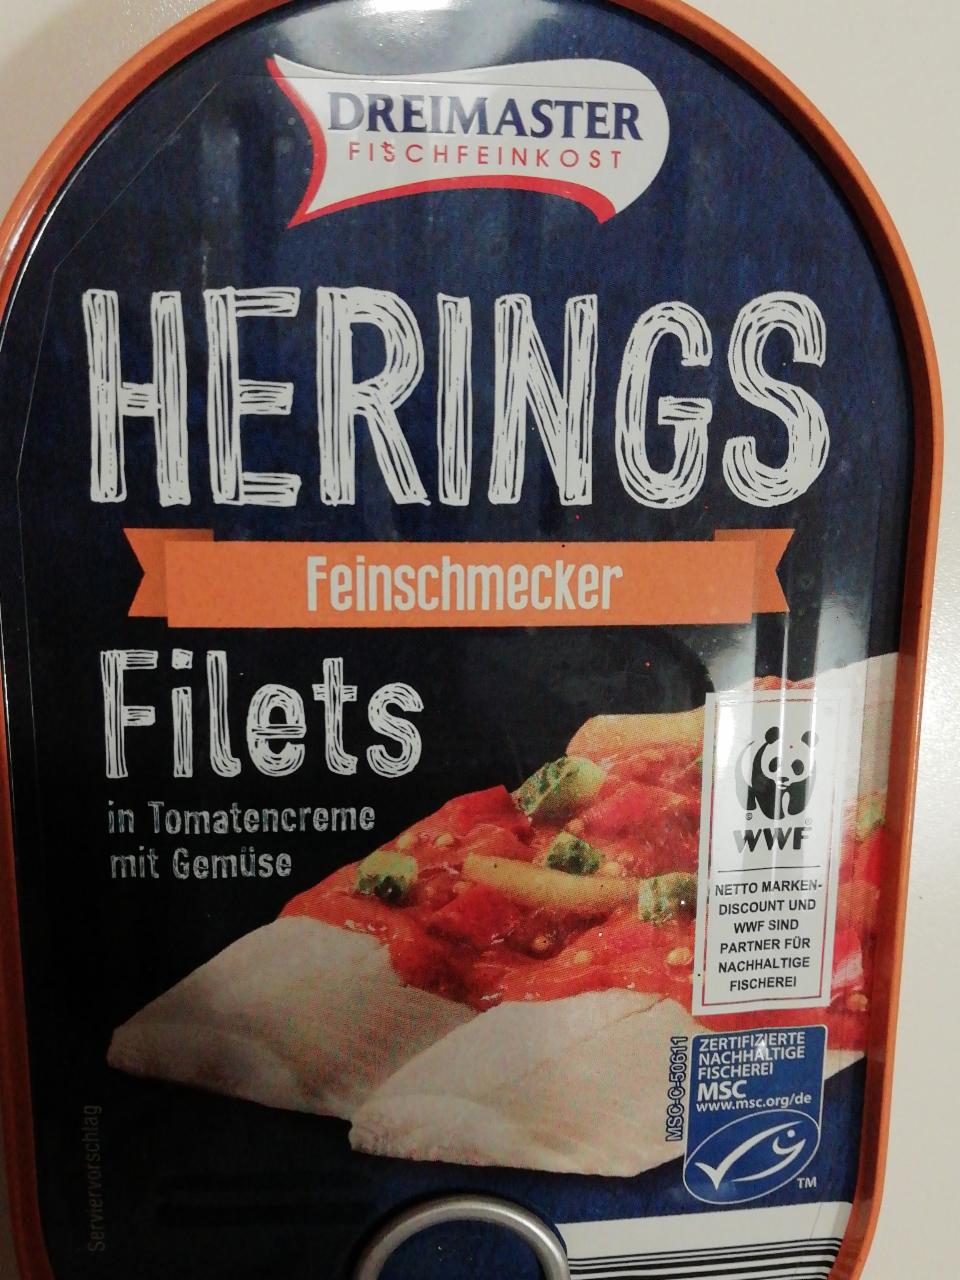 Fotografie - Herings filets Feinschmecker Dreimaster Fischfeinkost